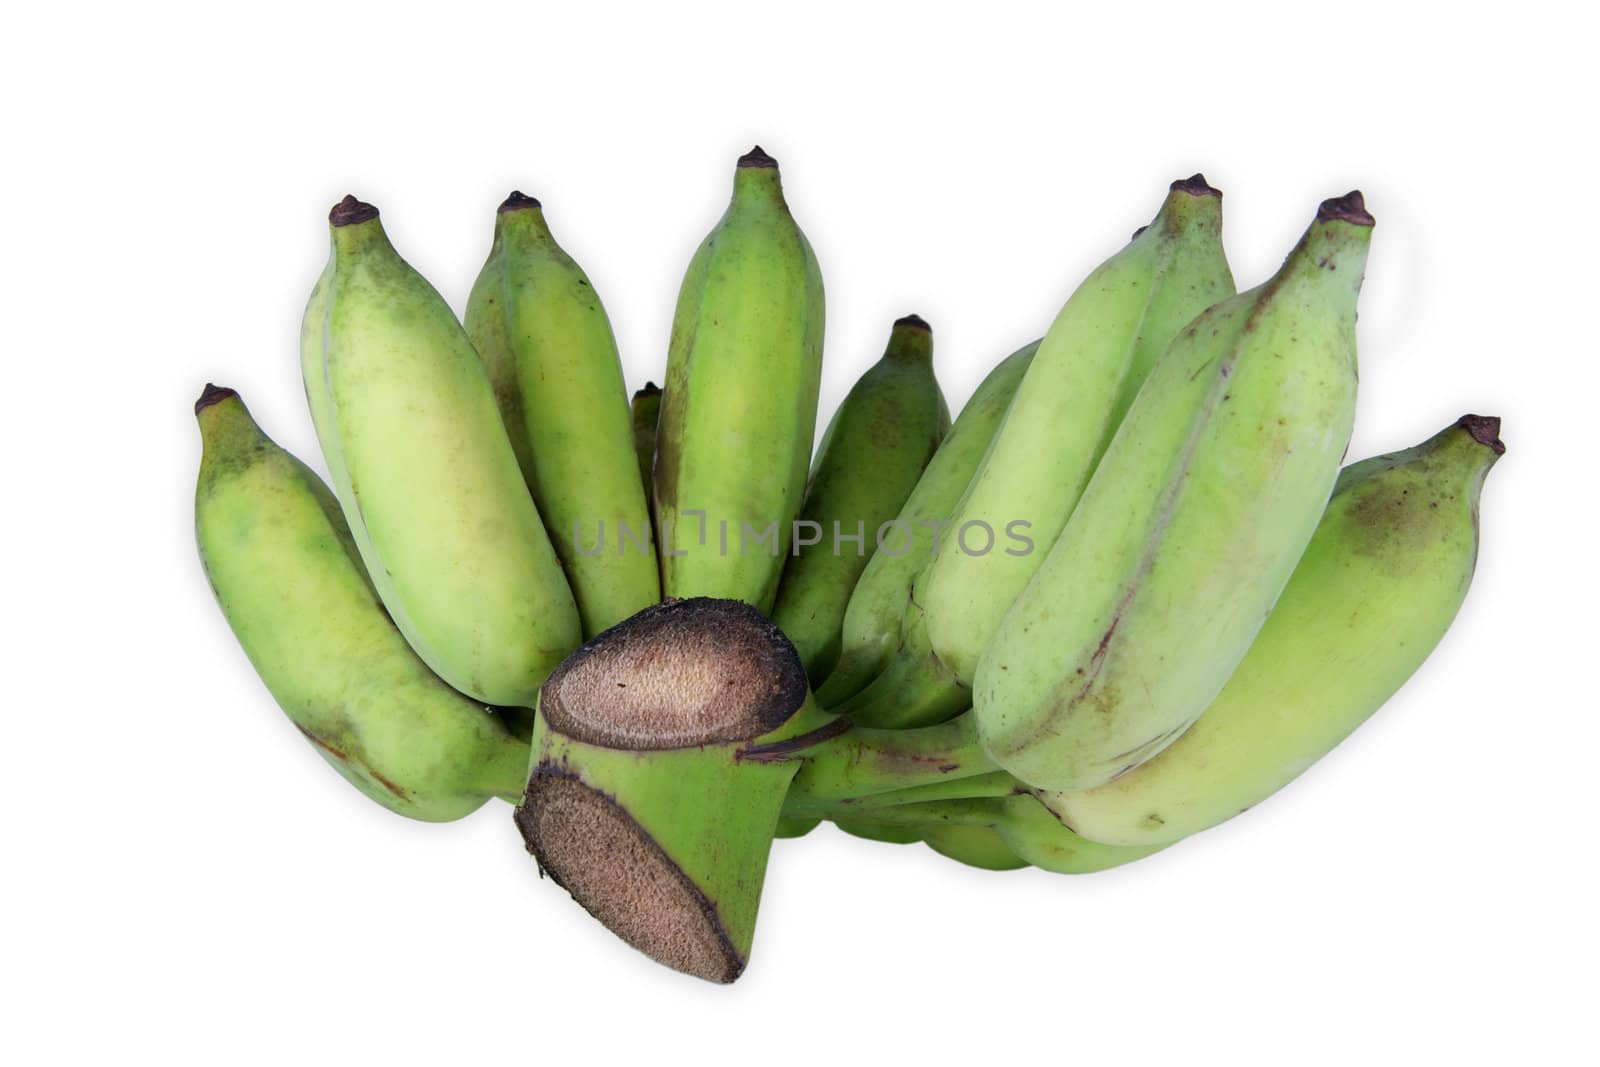 banana by antpkr